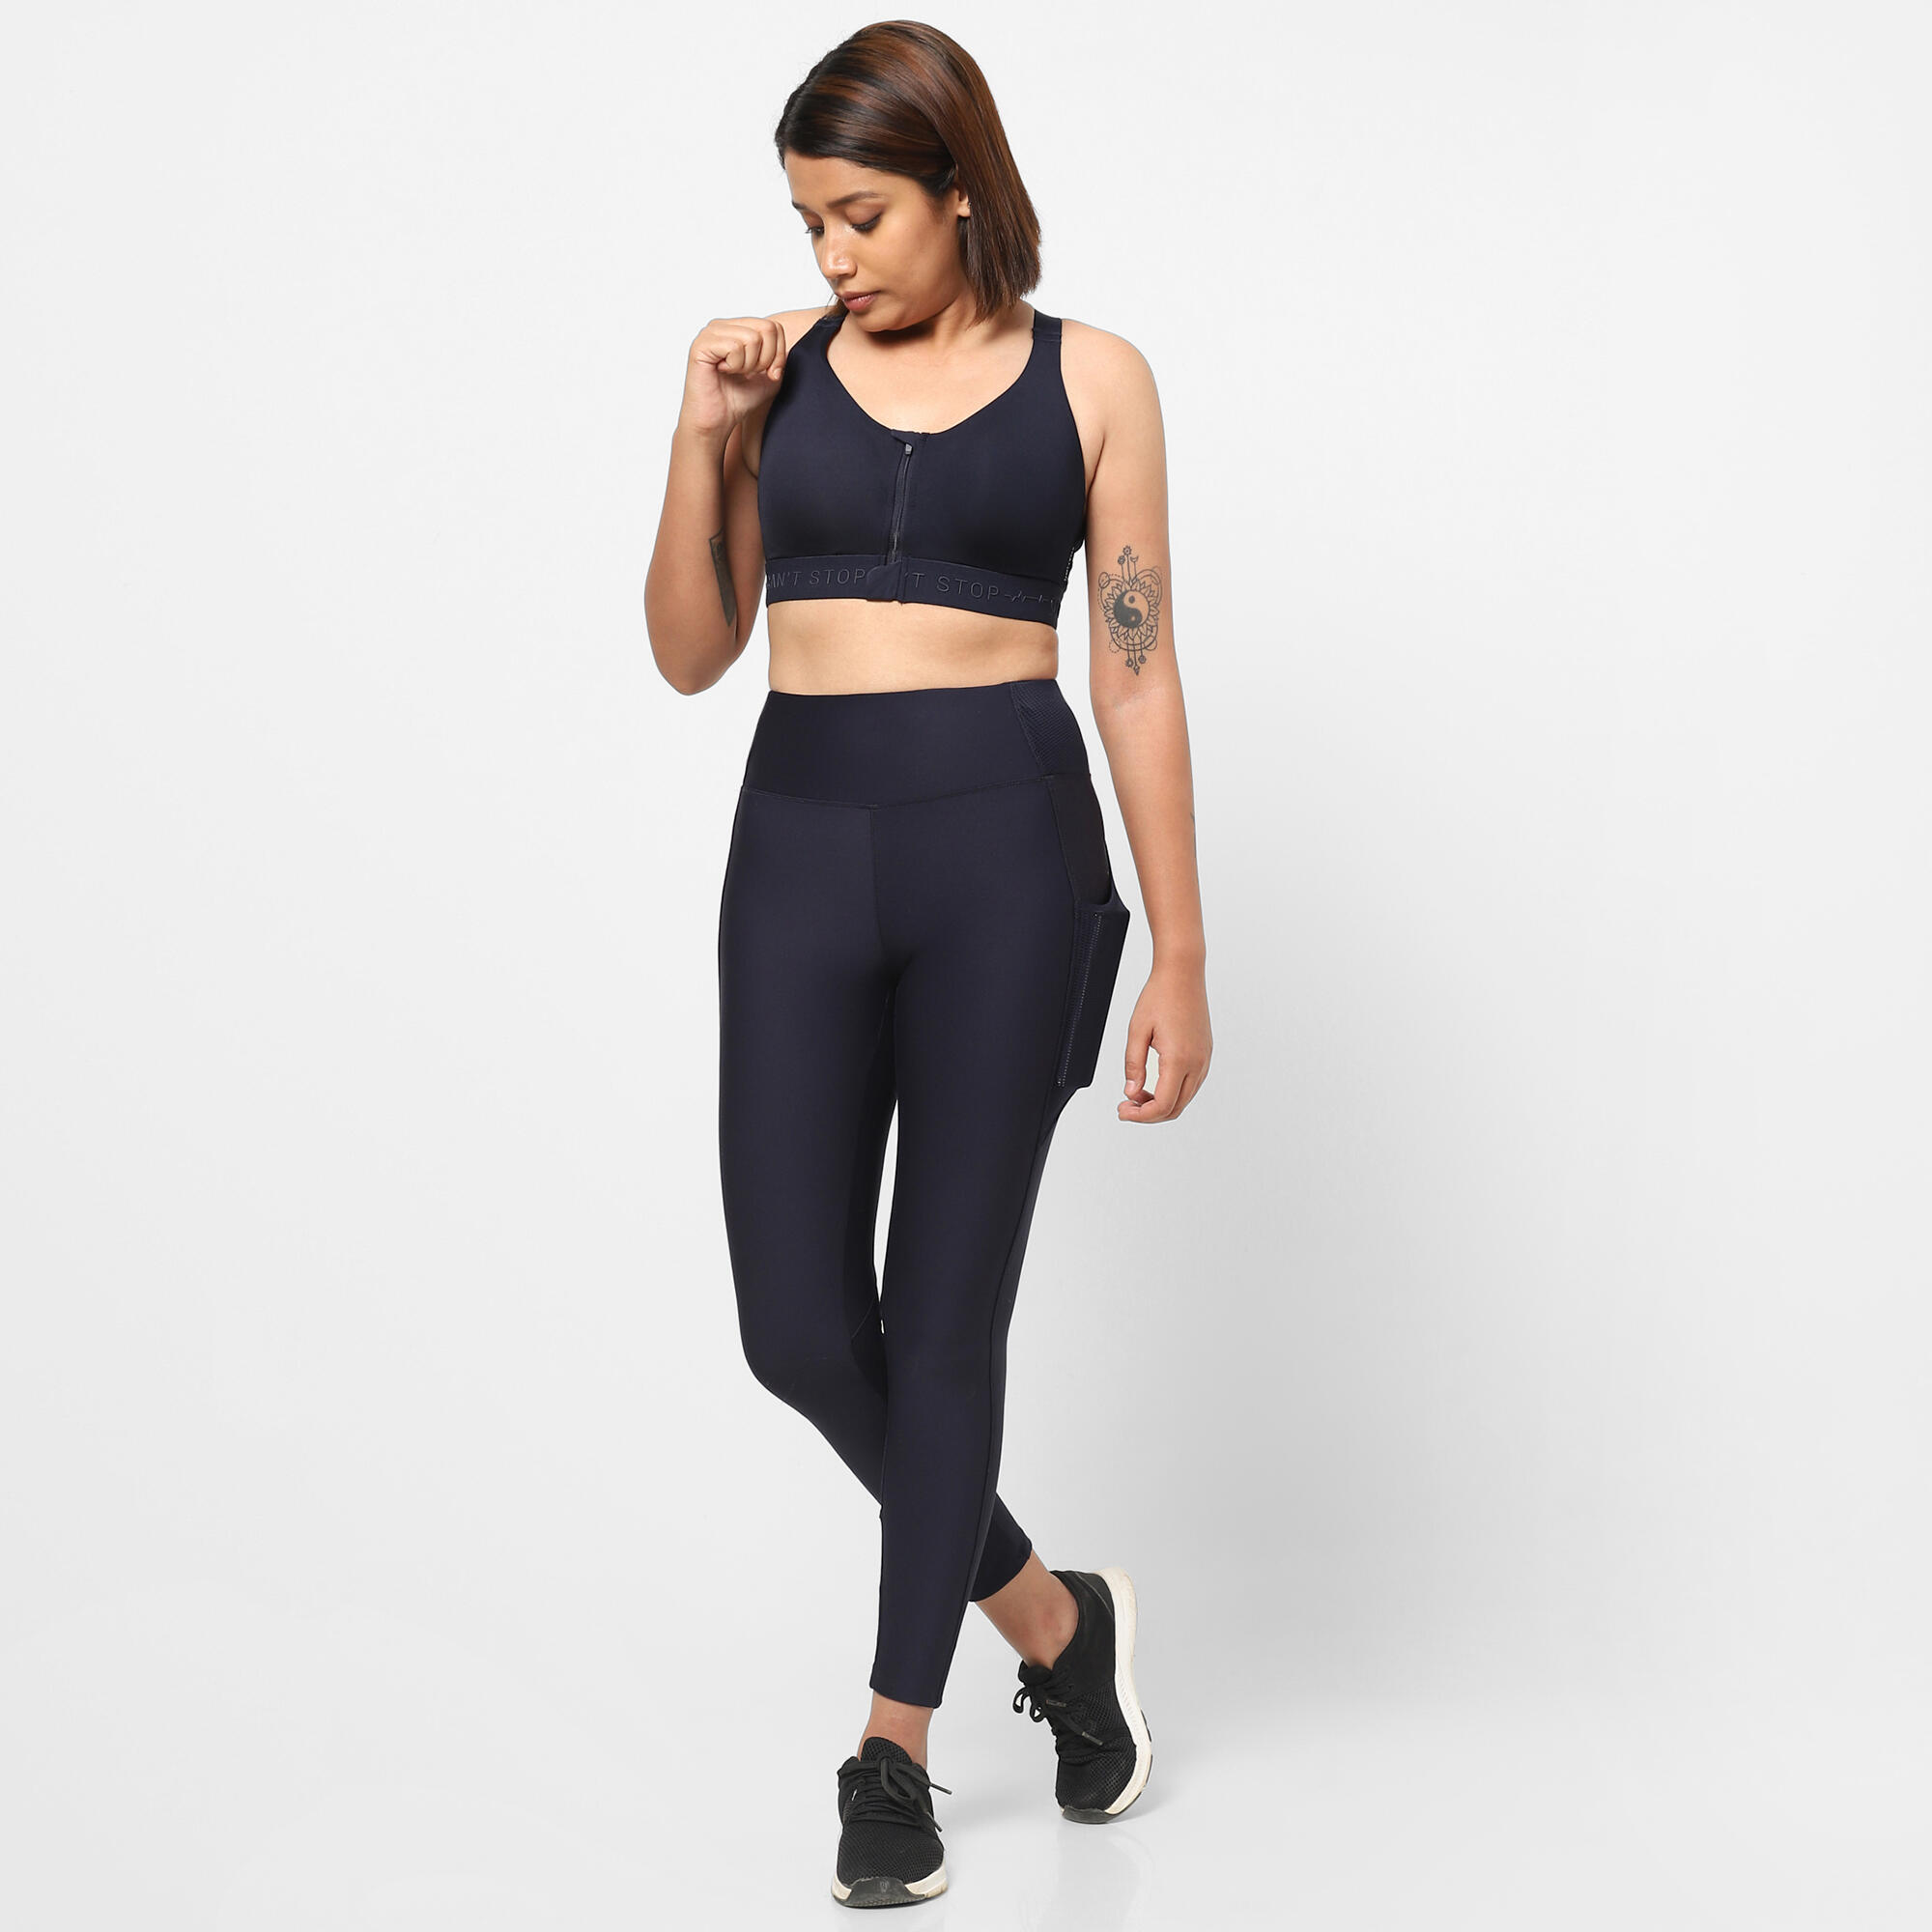 Fitness Leggings Women Push Up Gym Clothing High Waist Short Sexy Workout  Pants | eBay